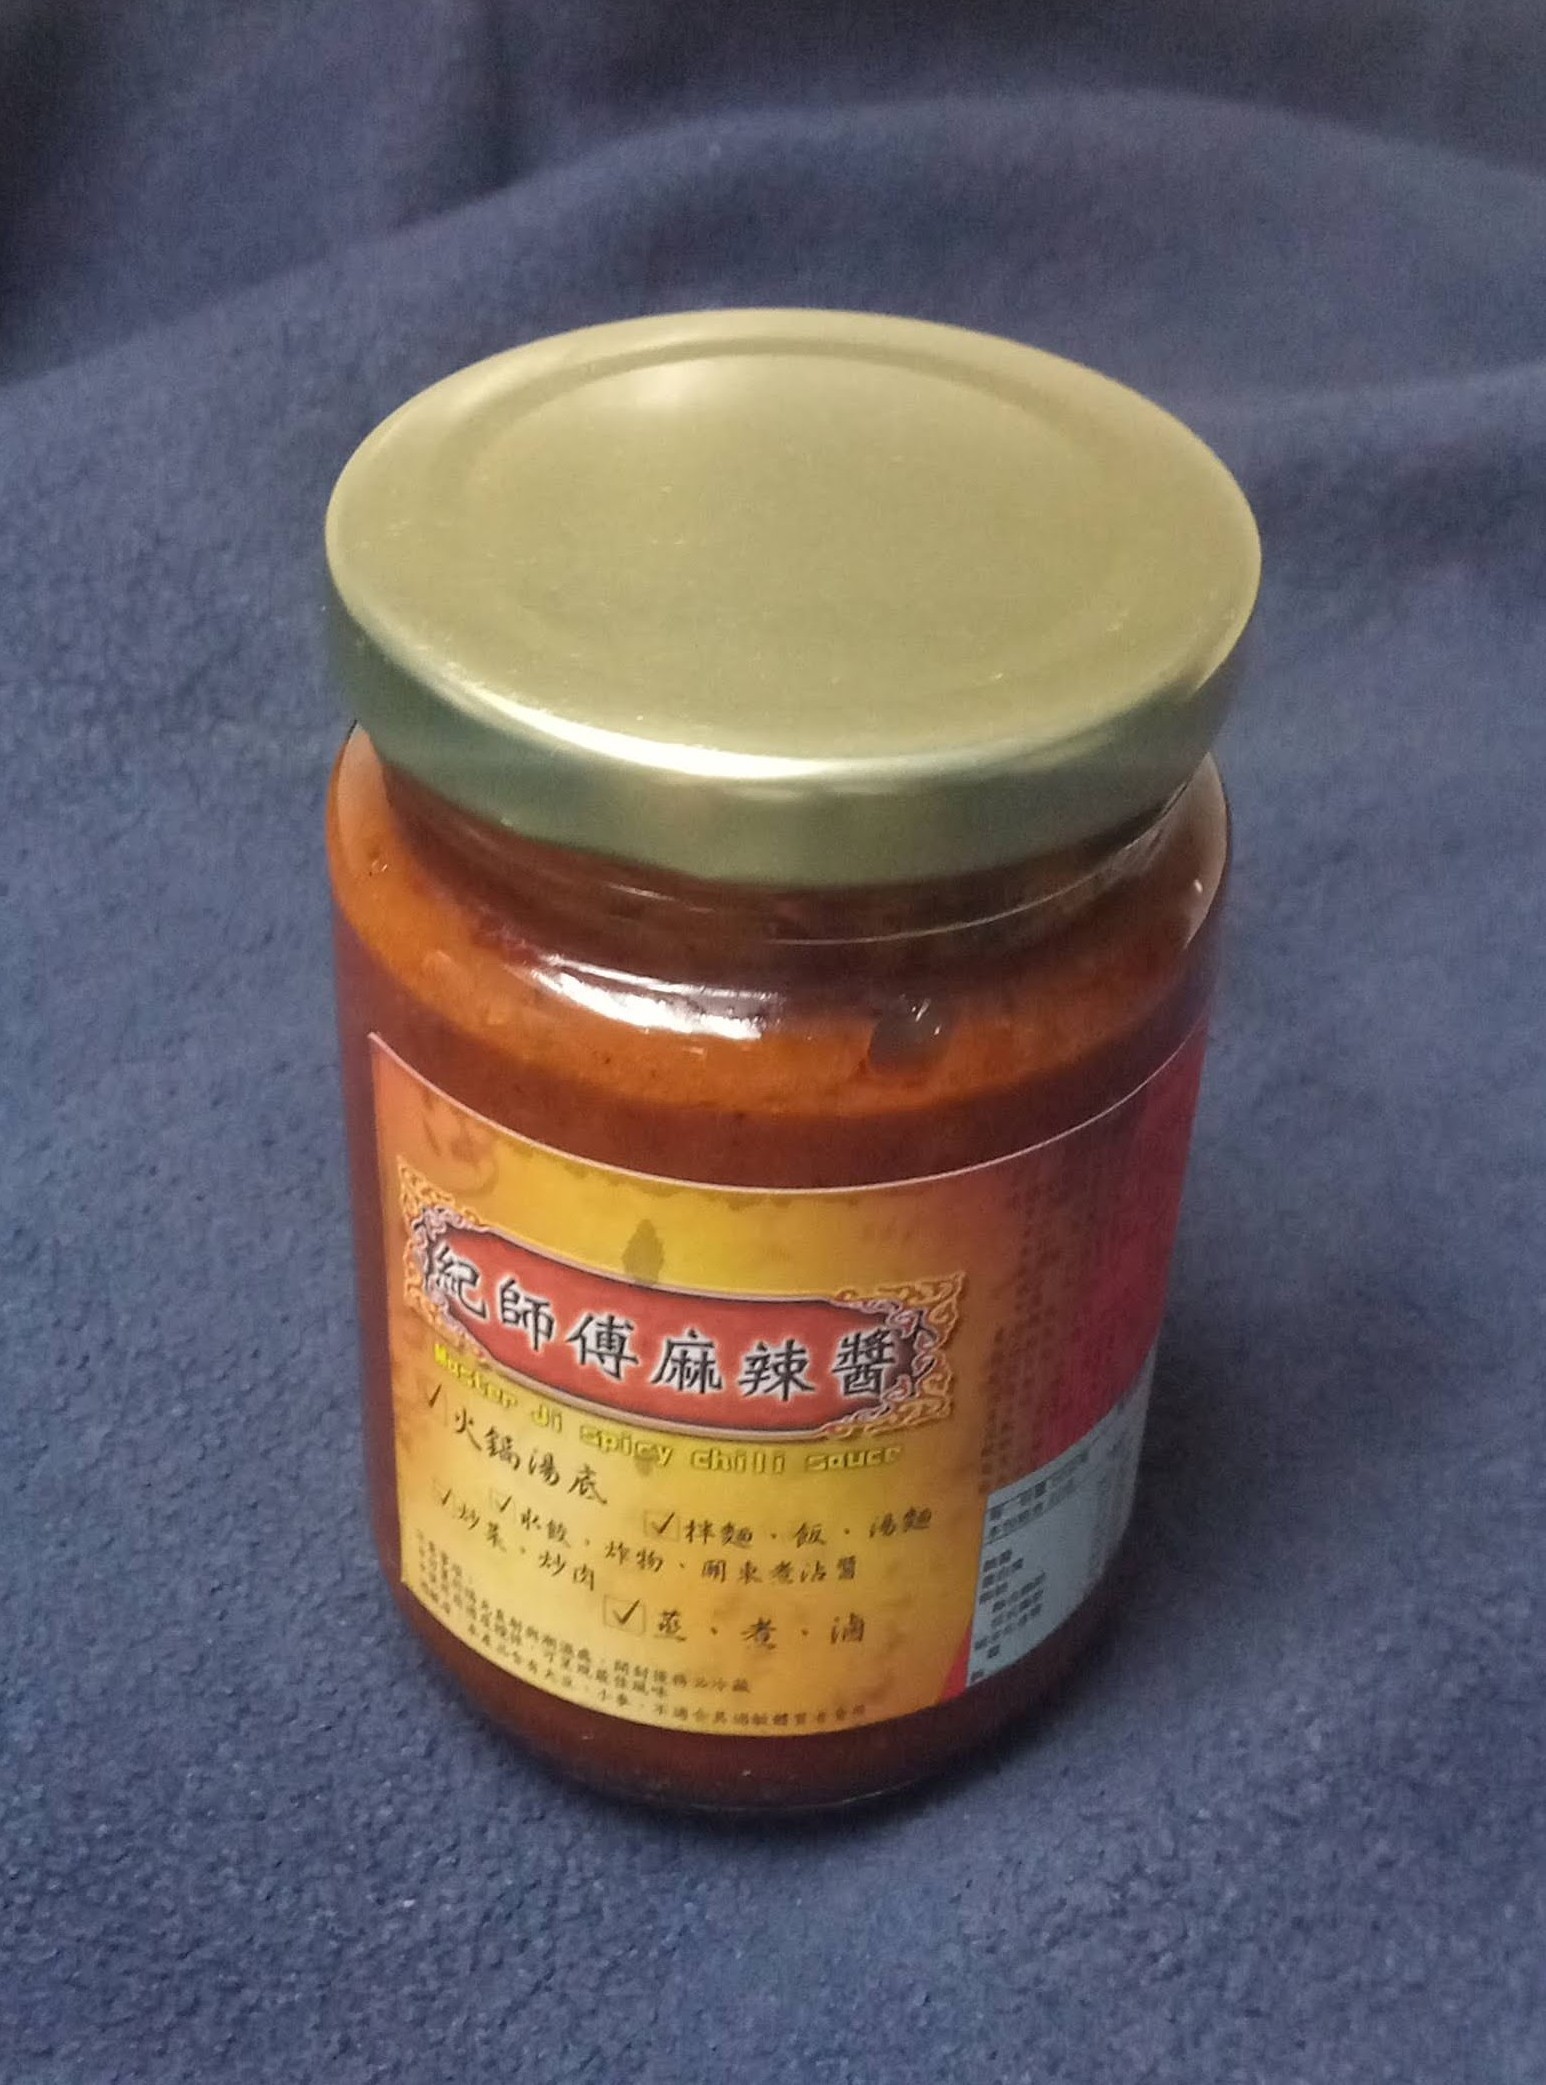 紀師傅麻辣醬(Master Ji spicy chili sauce)